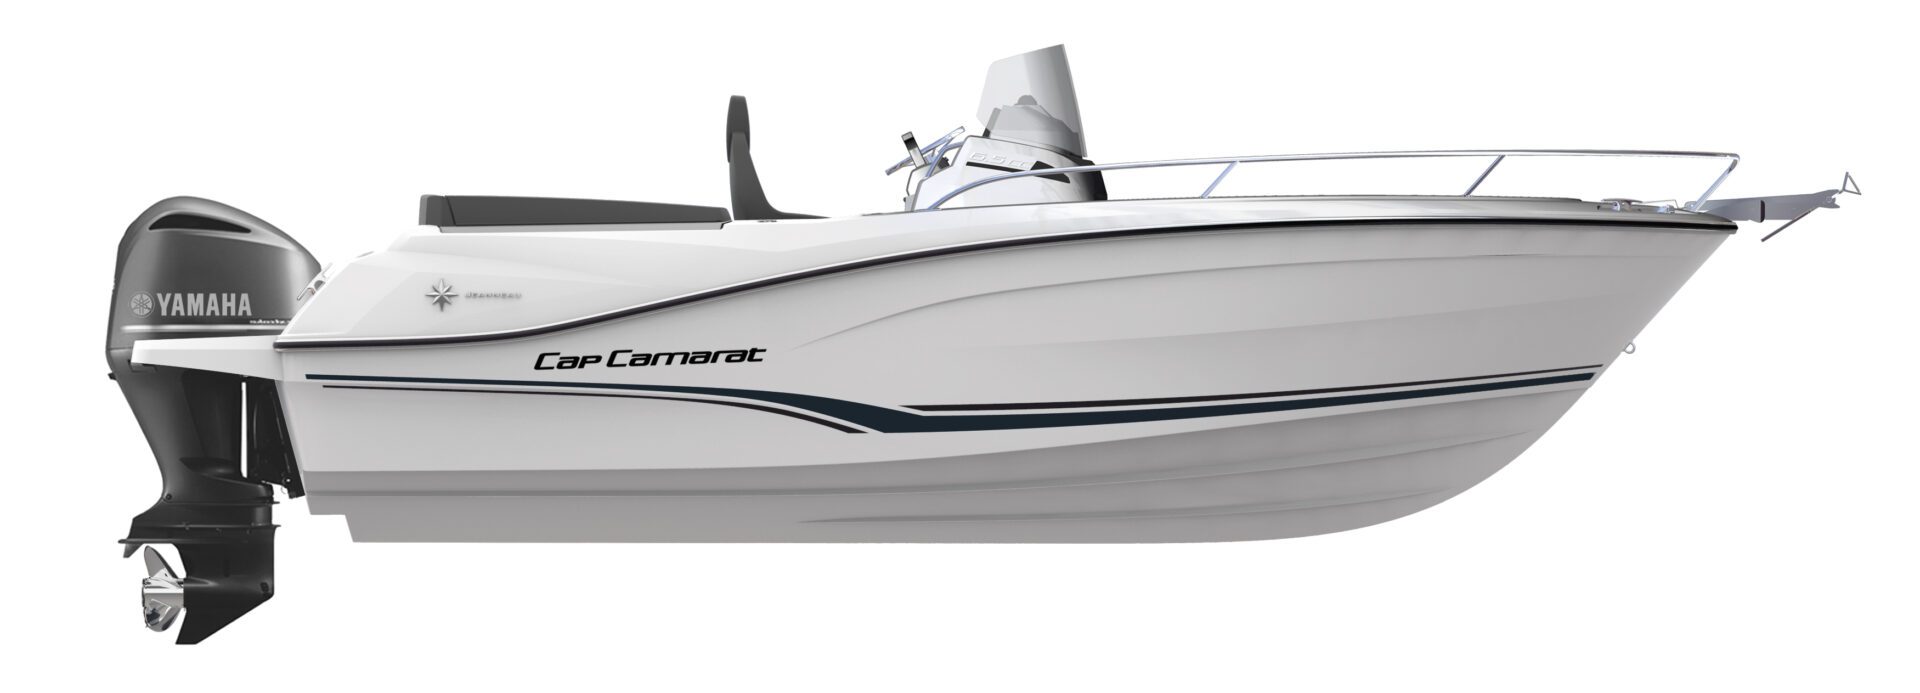 Jeanneau Camarat 6.5 cc - Stream Yachts 